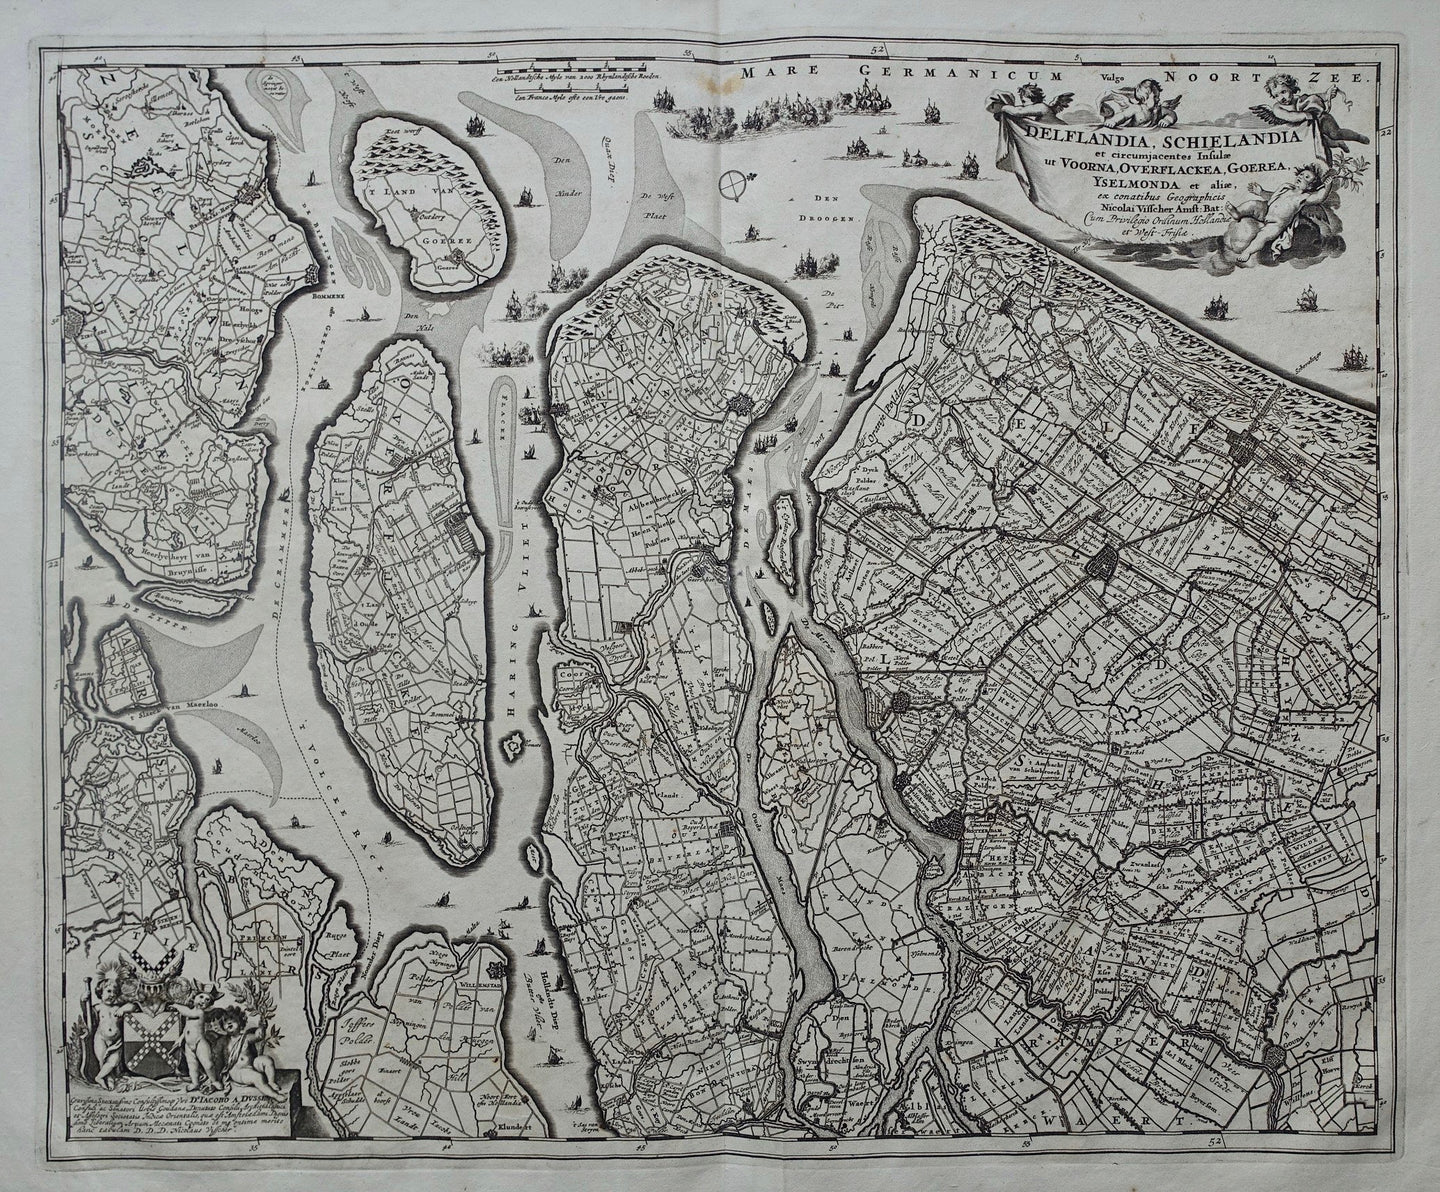 Delfland Schieland en Zuid-Hollandse eilanden - N Visscher - ca 1684